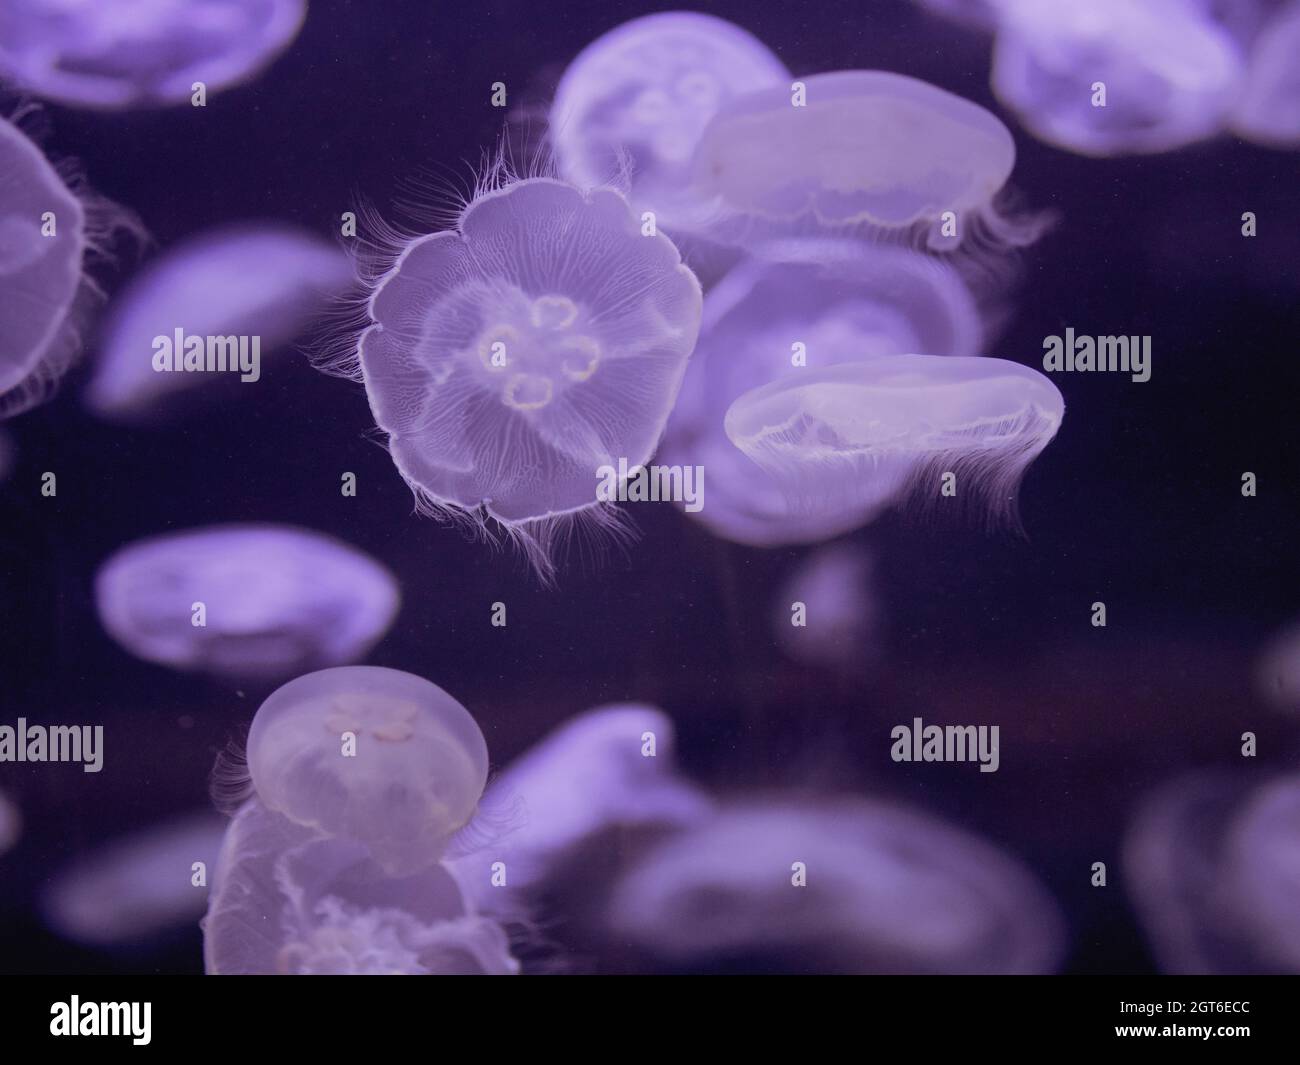 Close-up Of A Smack Of Moon Jellyfish, Aka Aurelia Aurita In The Ocean Stock Photo